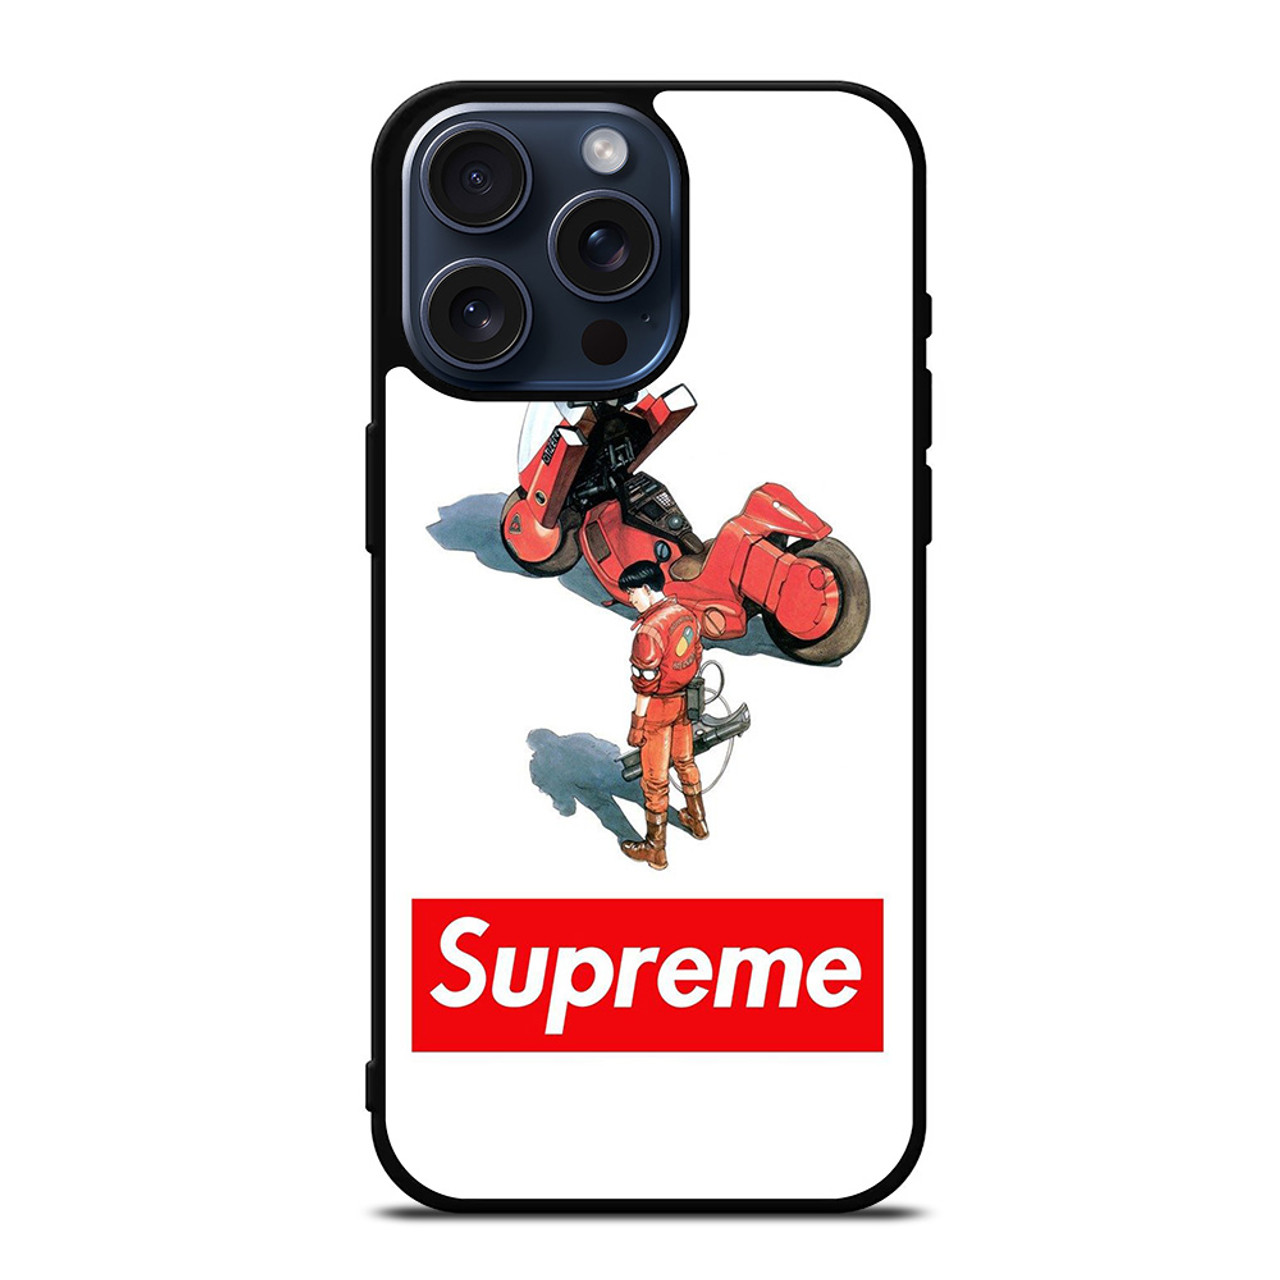 SUPREME X AKIRA ANIME 2 iPhone XS Max Case Cover